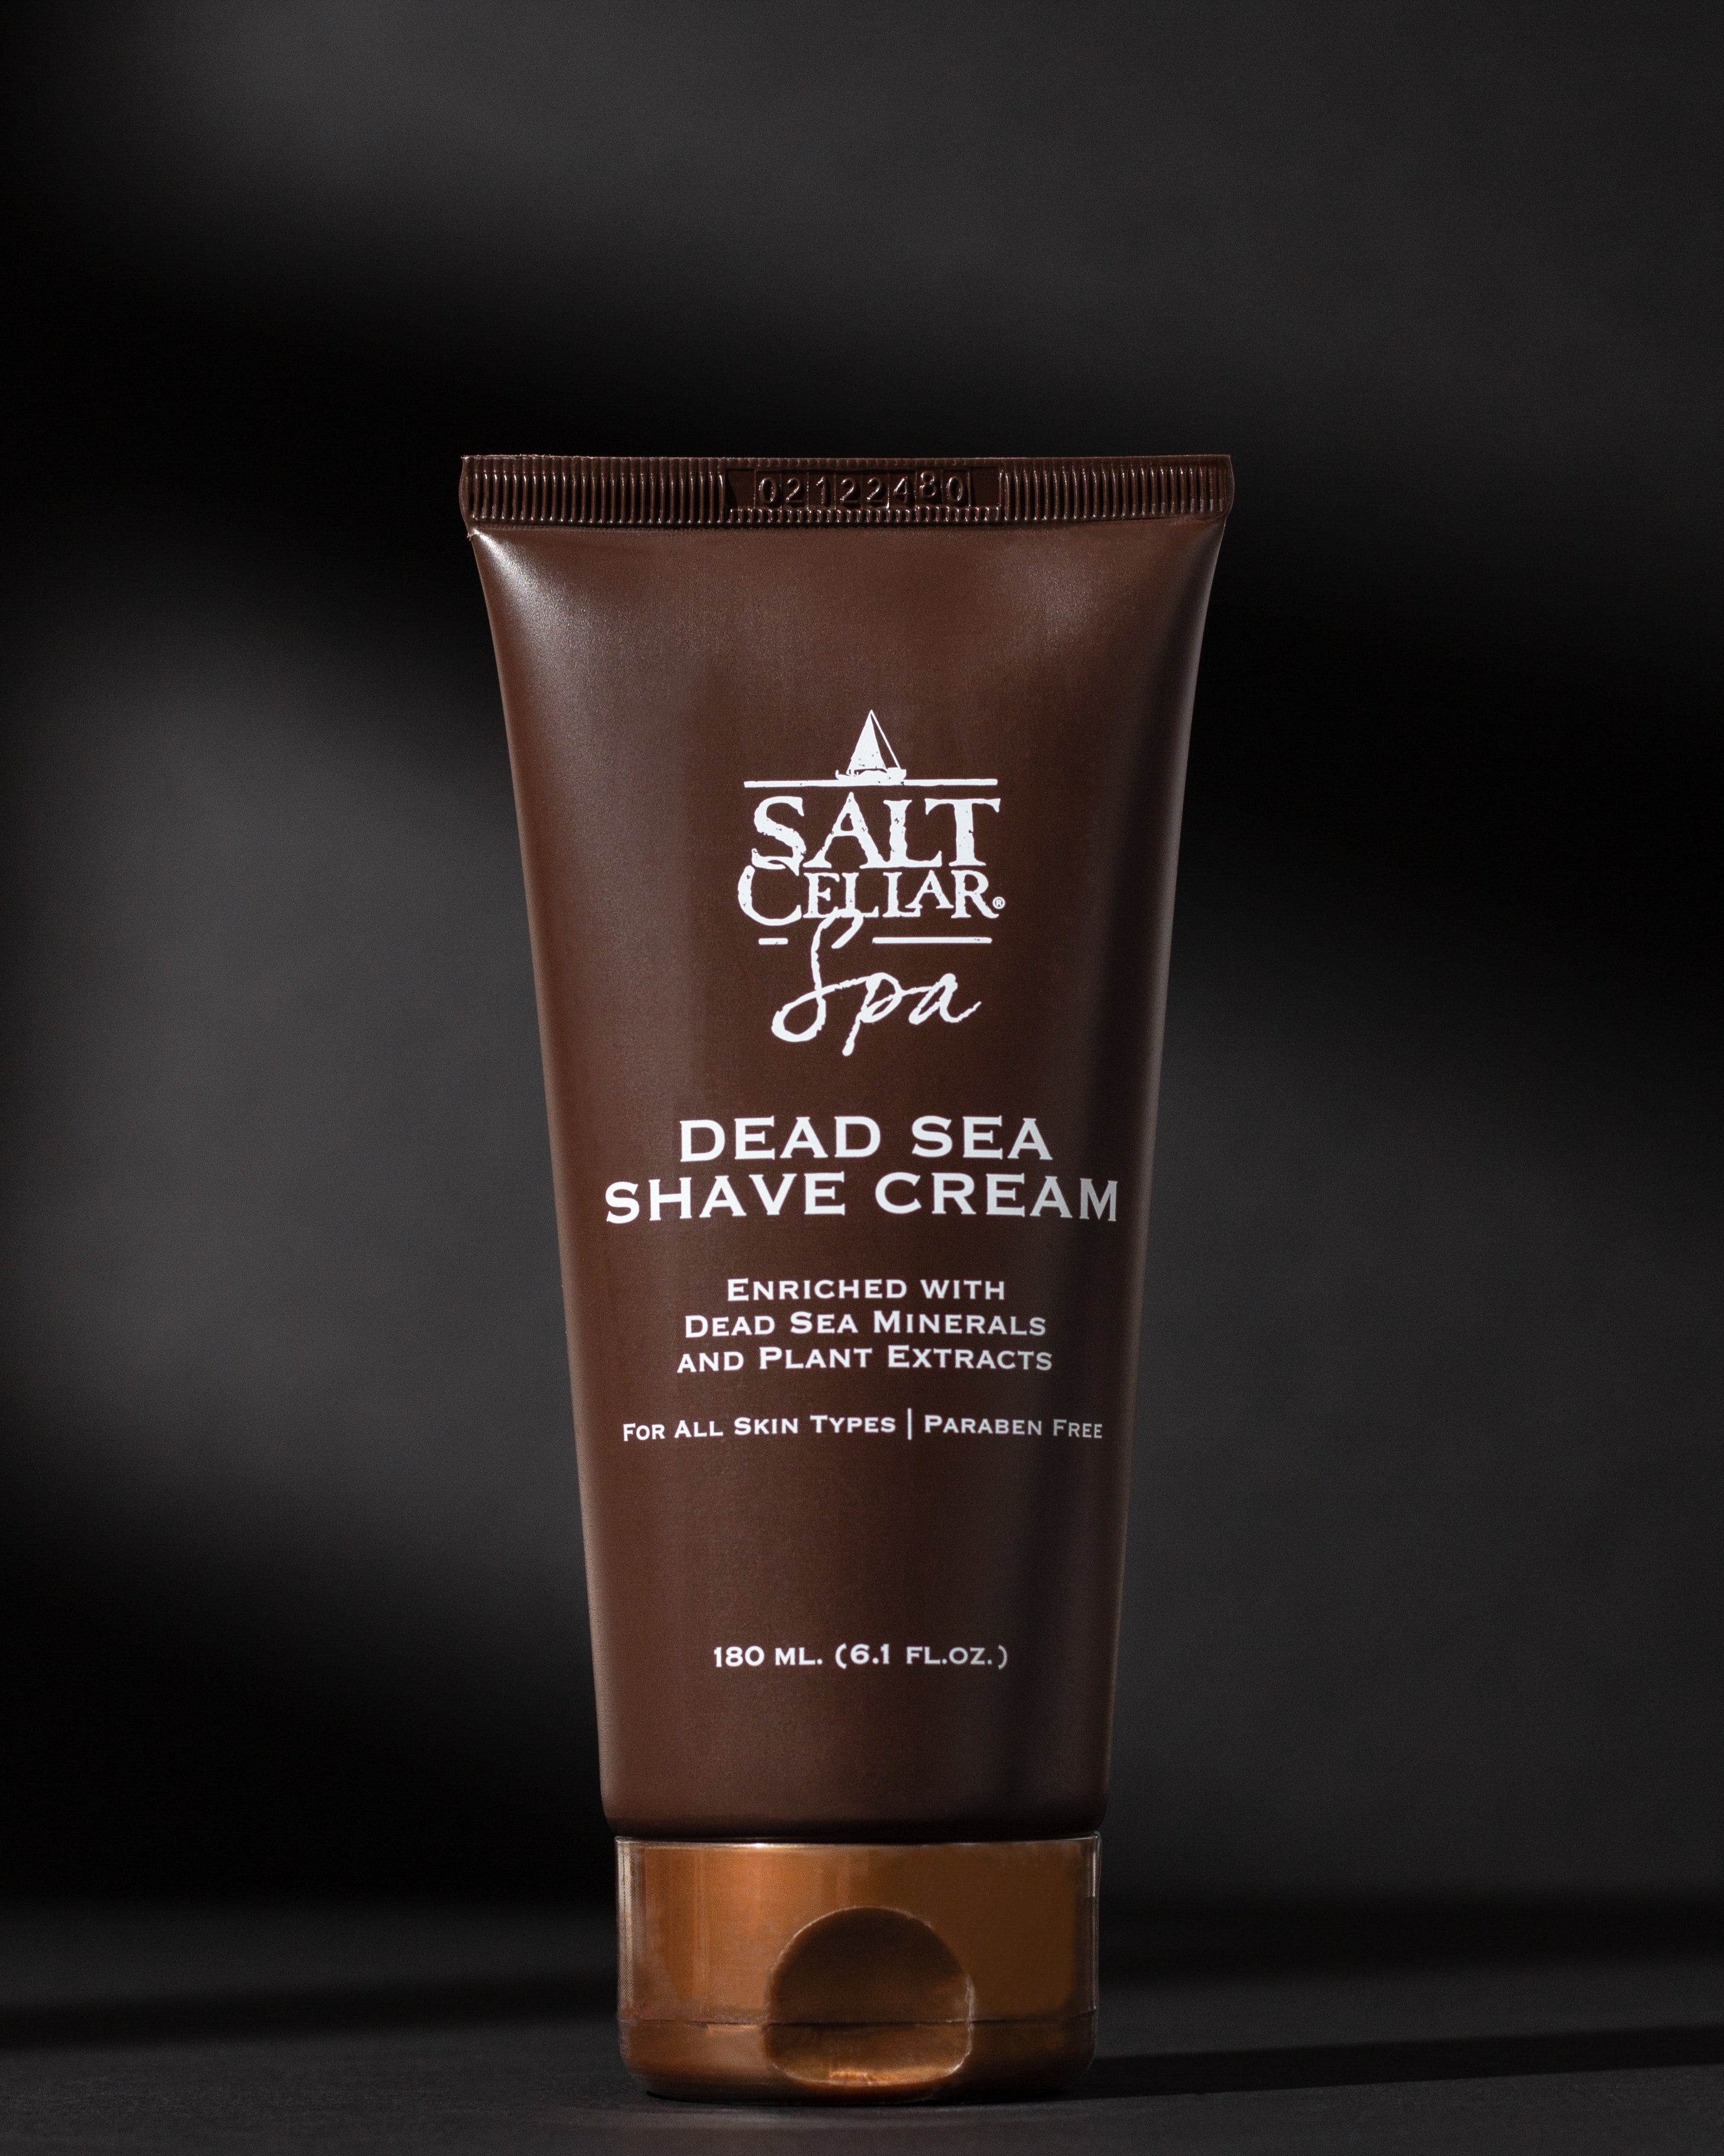 Dead Sea Shave Cream The Salt Cellar